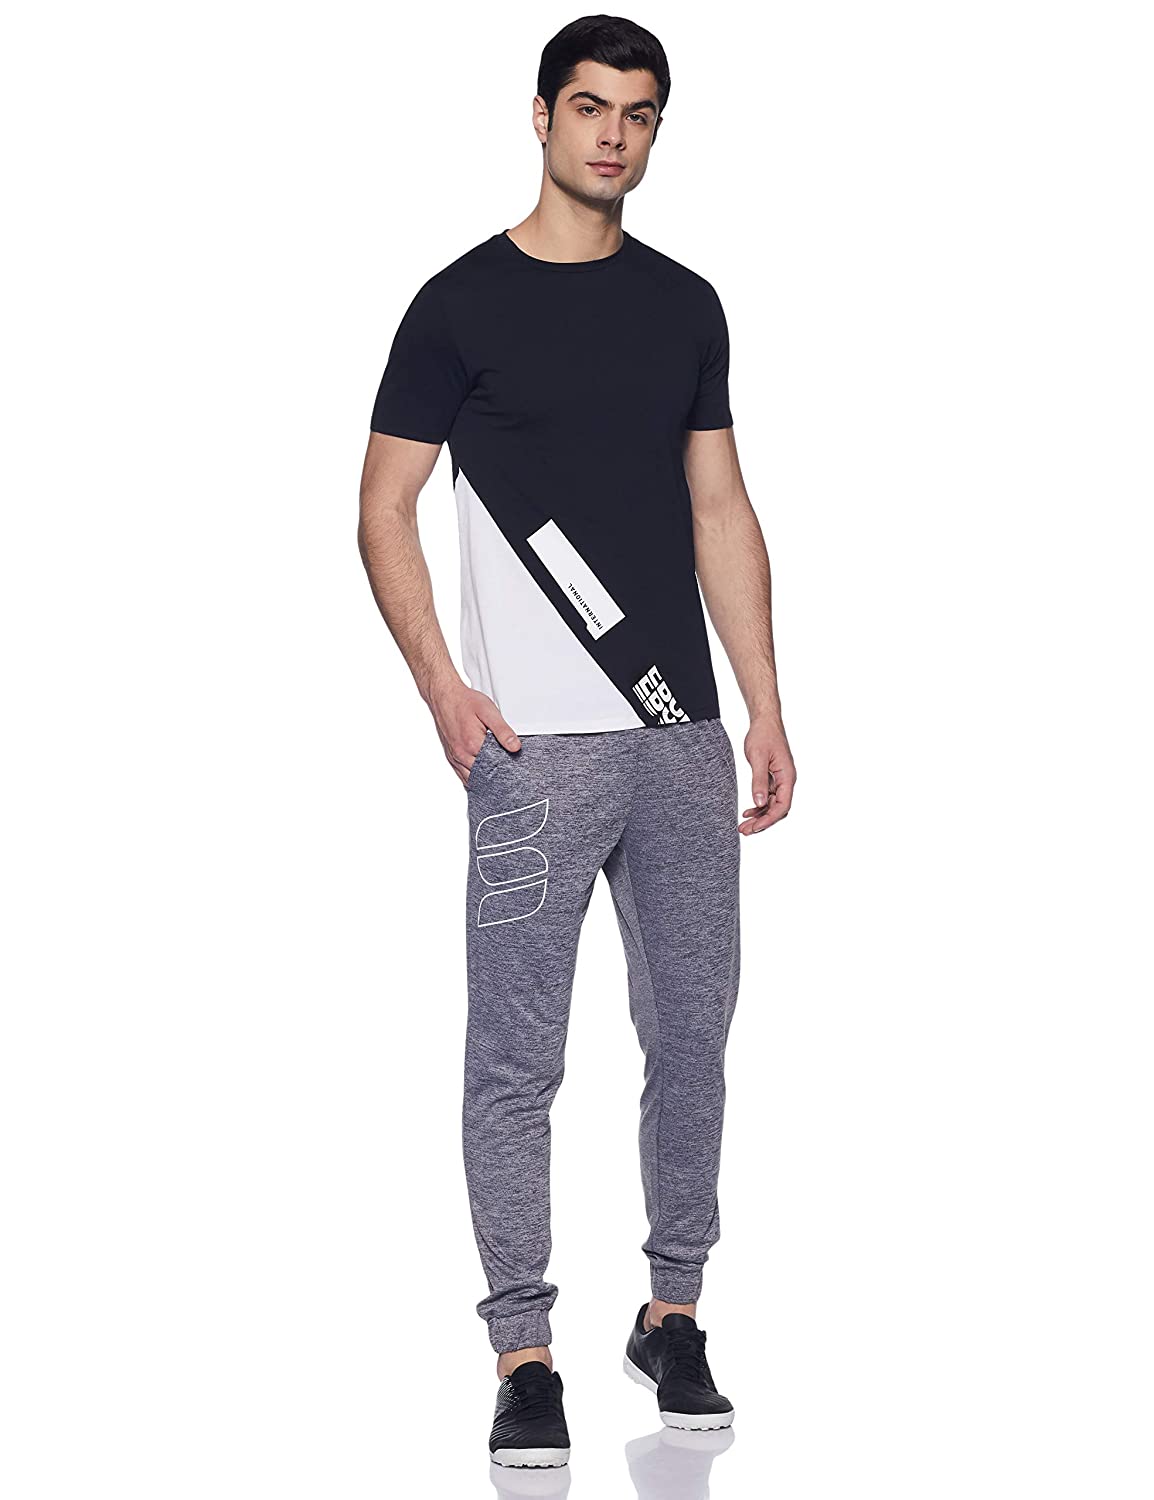 Amazon Brand - Symactive Men's Regular Track Pants